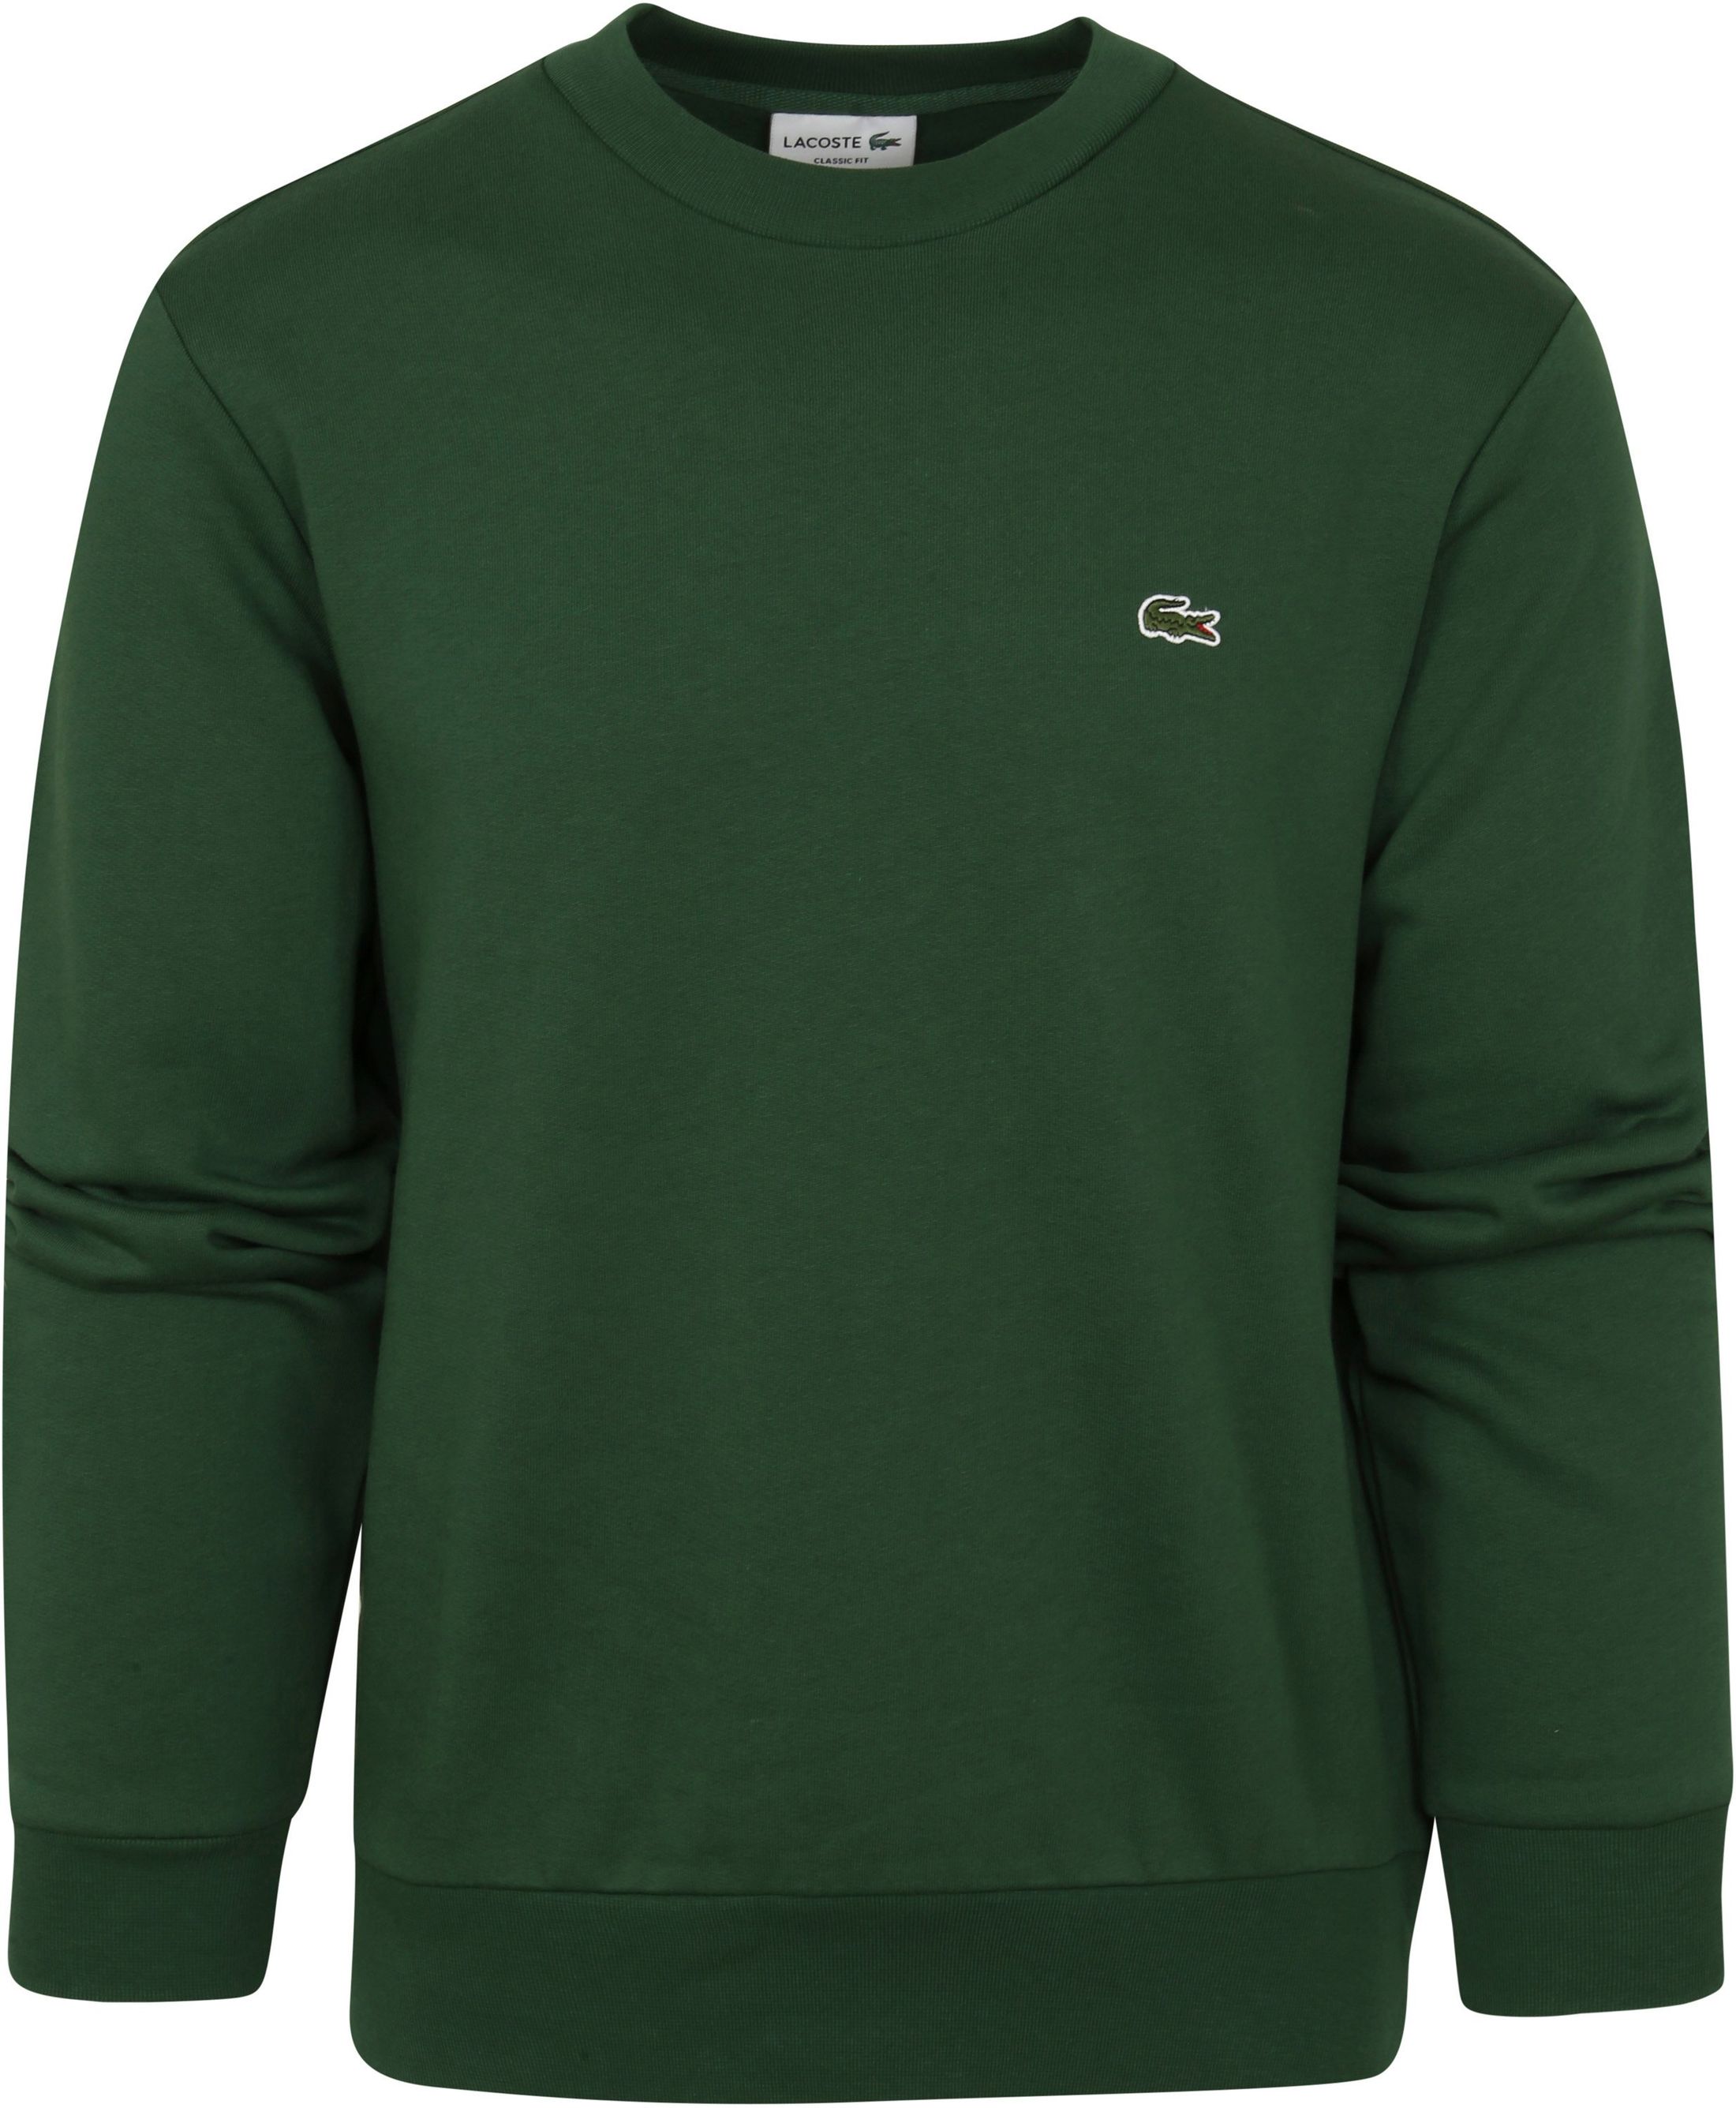 Lacoste Sweater O-neck Green Dark Green size L